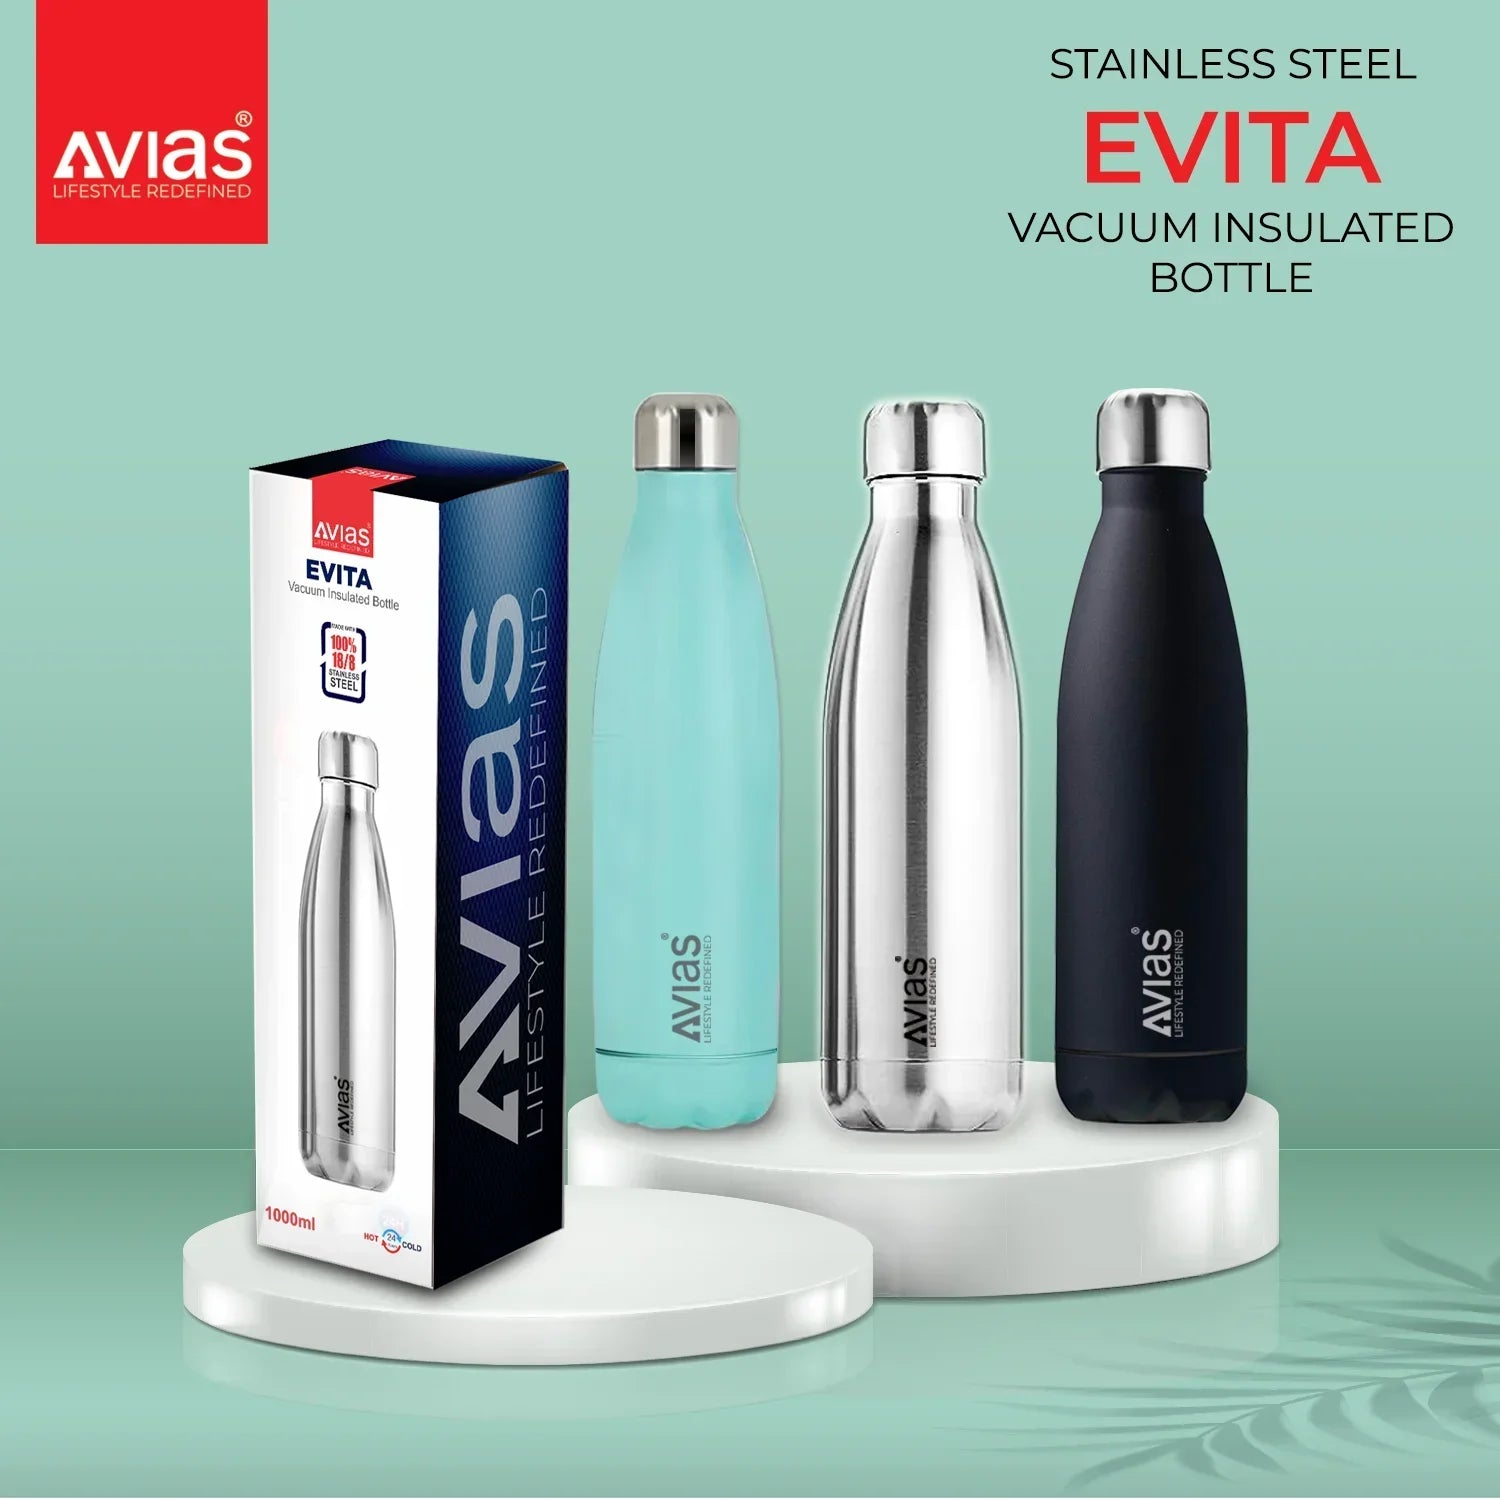 Evita premium stainless steel Vacuum Insulated Flask Water Bottle package